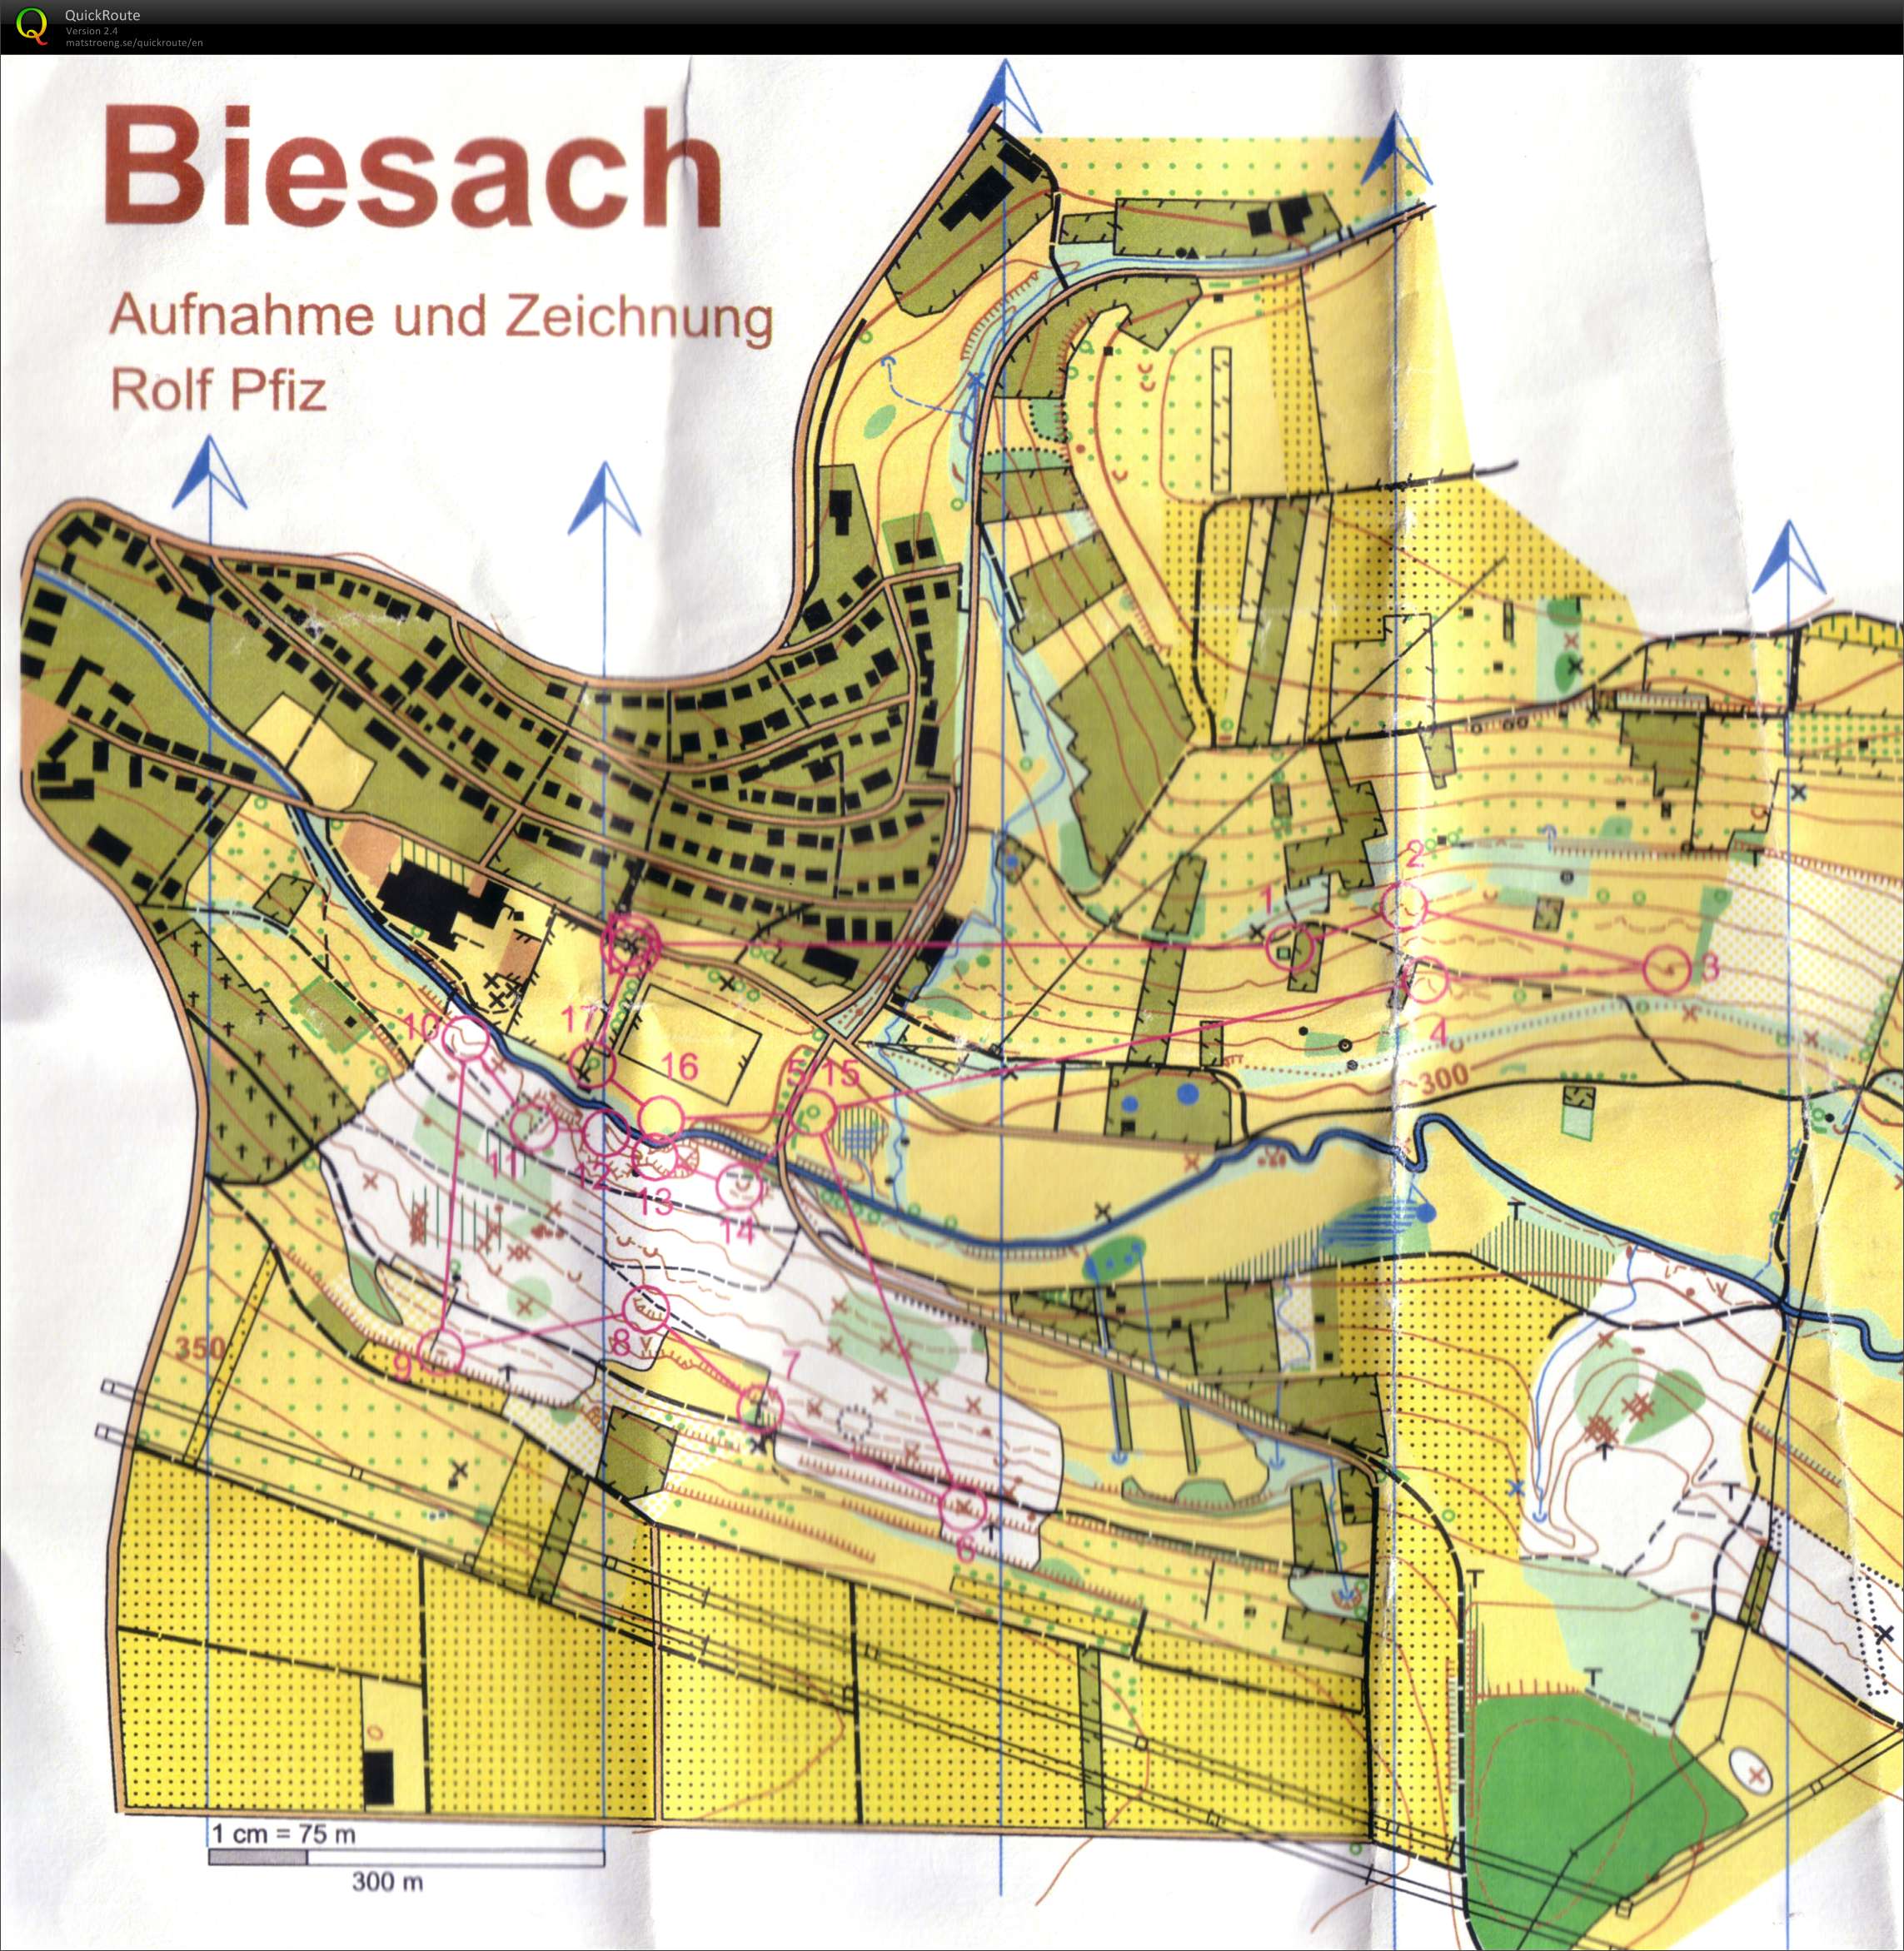 Training Biesach (2011-09-07)